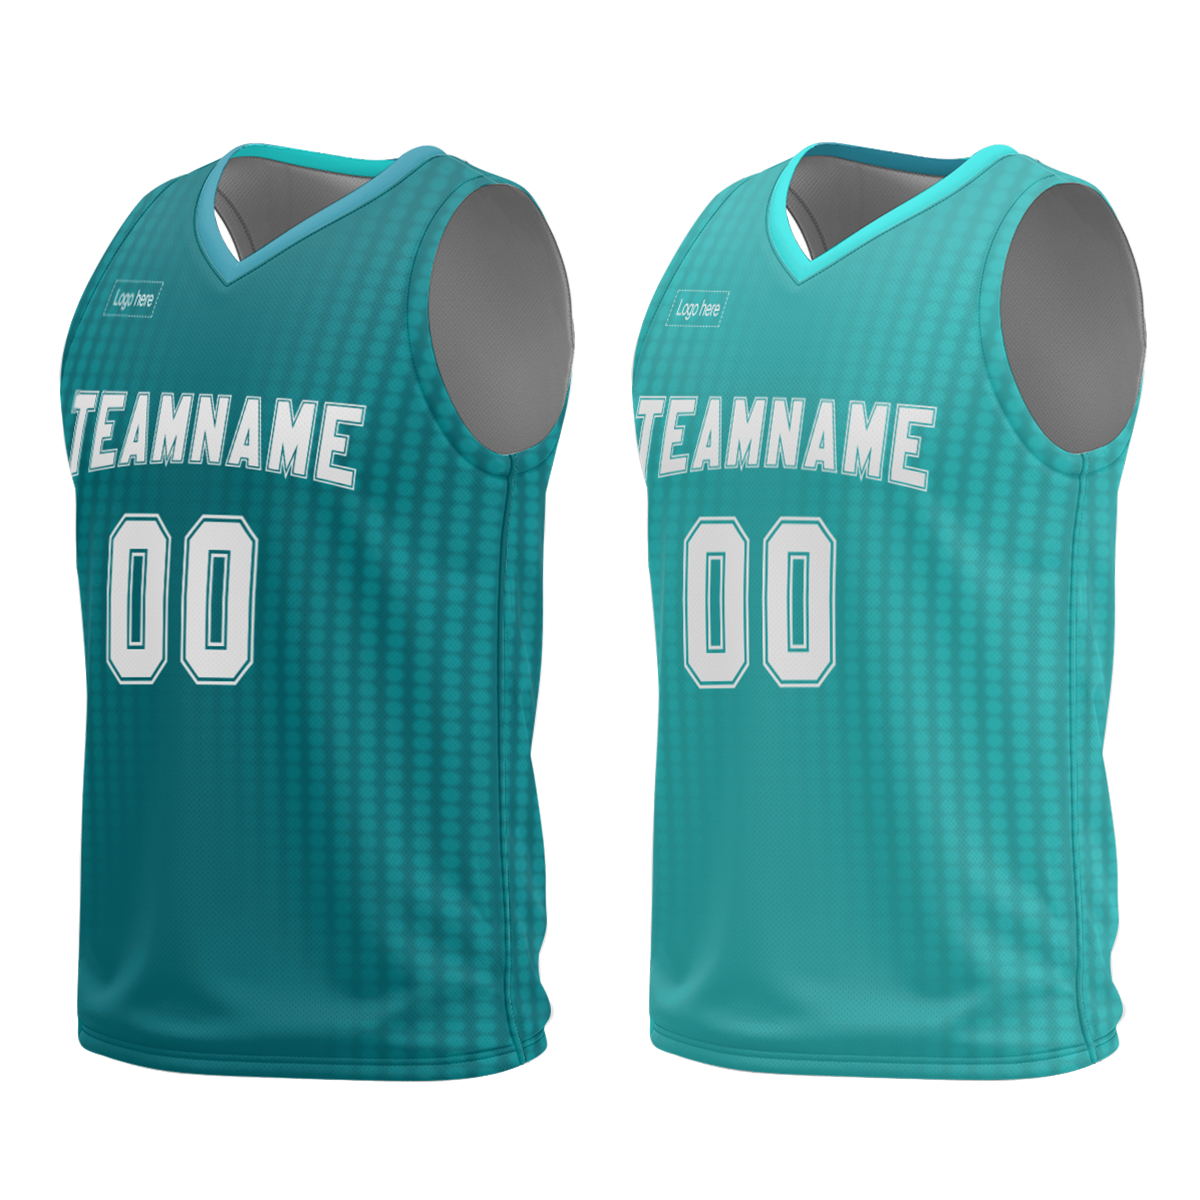 wholesale-professional-factory-sportswear-custom-print-on-demand-reversible-basketball-jersey-at-cj-pod-5